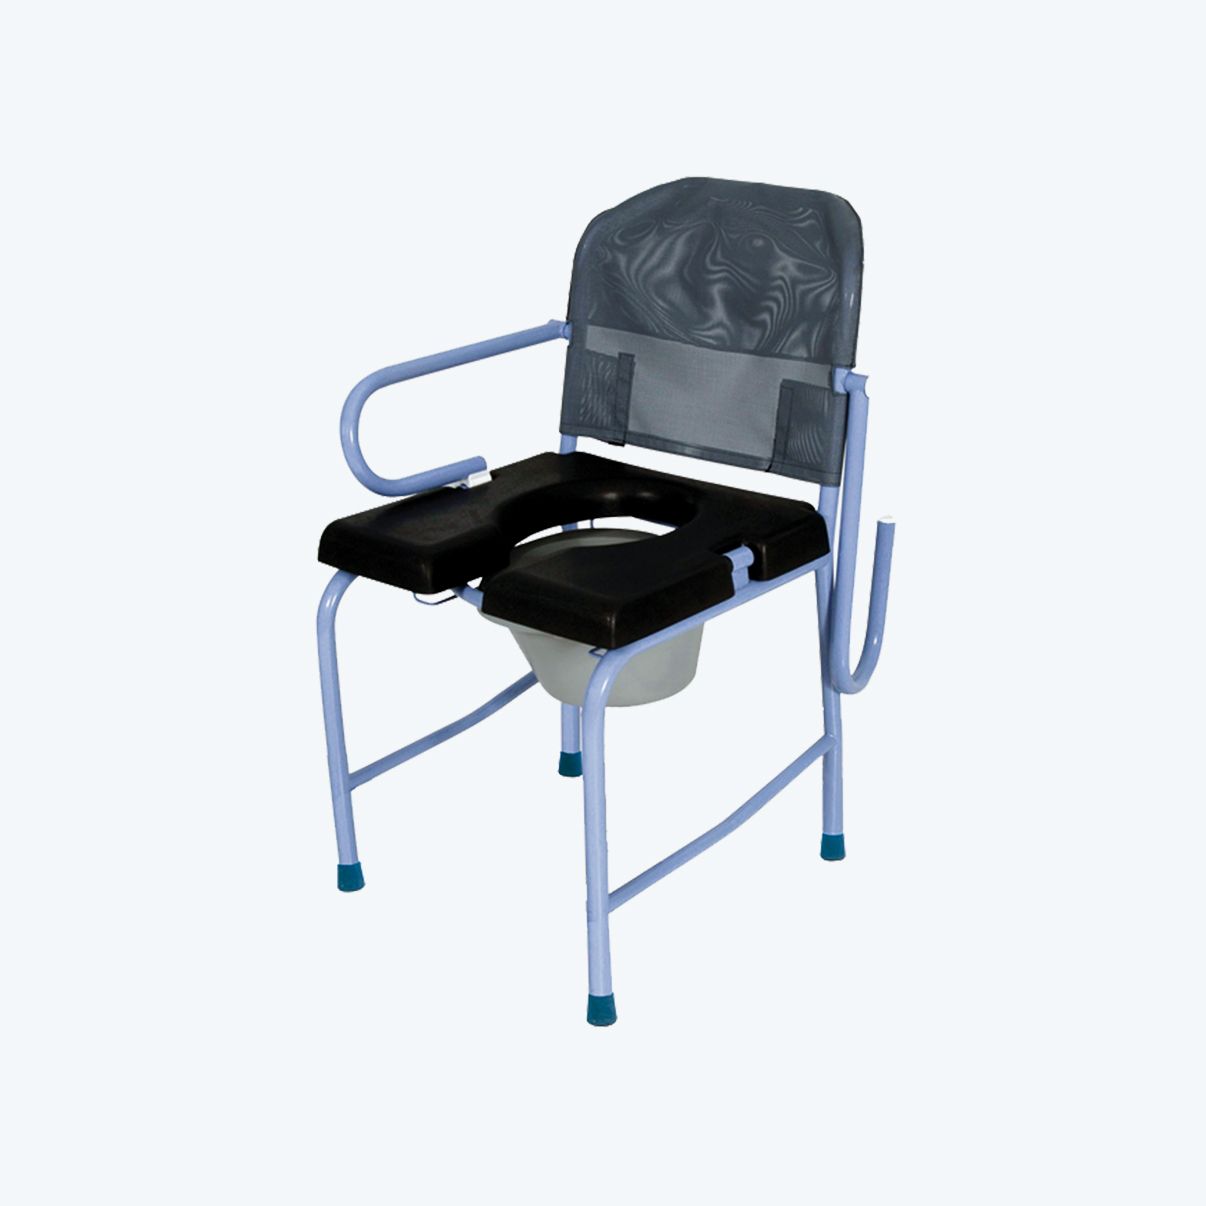 Chaise d'aisance – Géant Medical